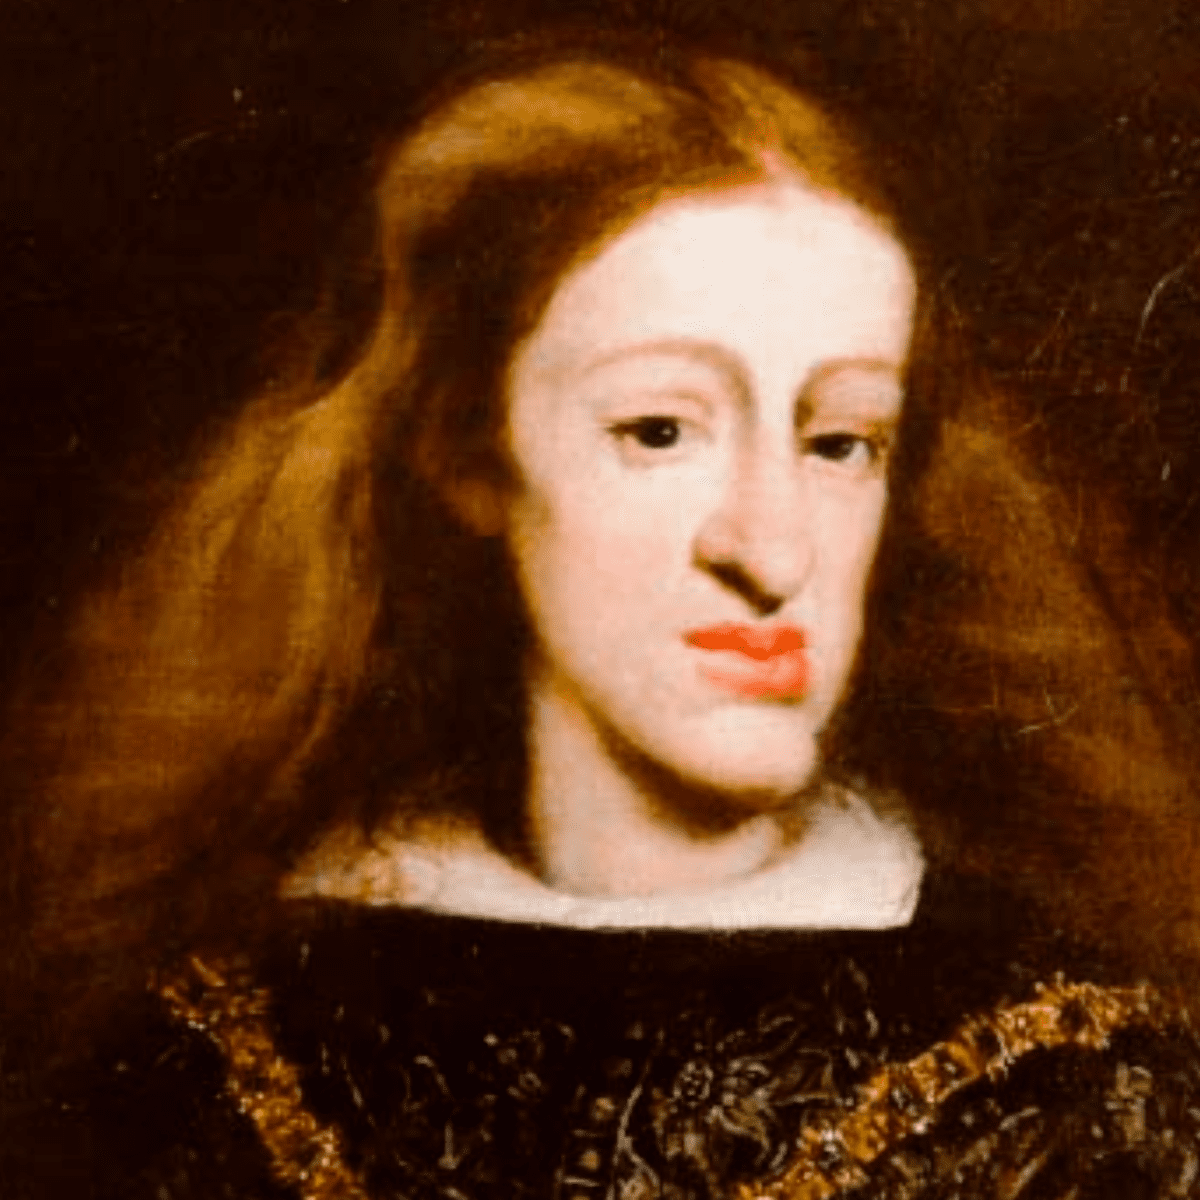 The Habsburg Jaw: Inbreeding and European Royalty